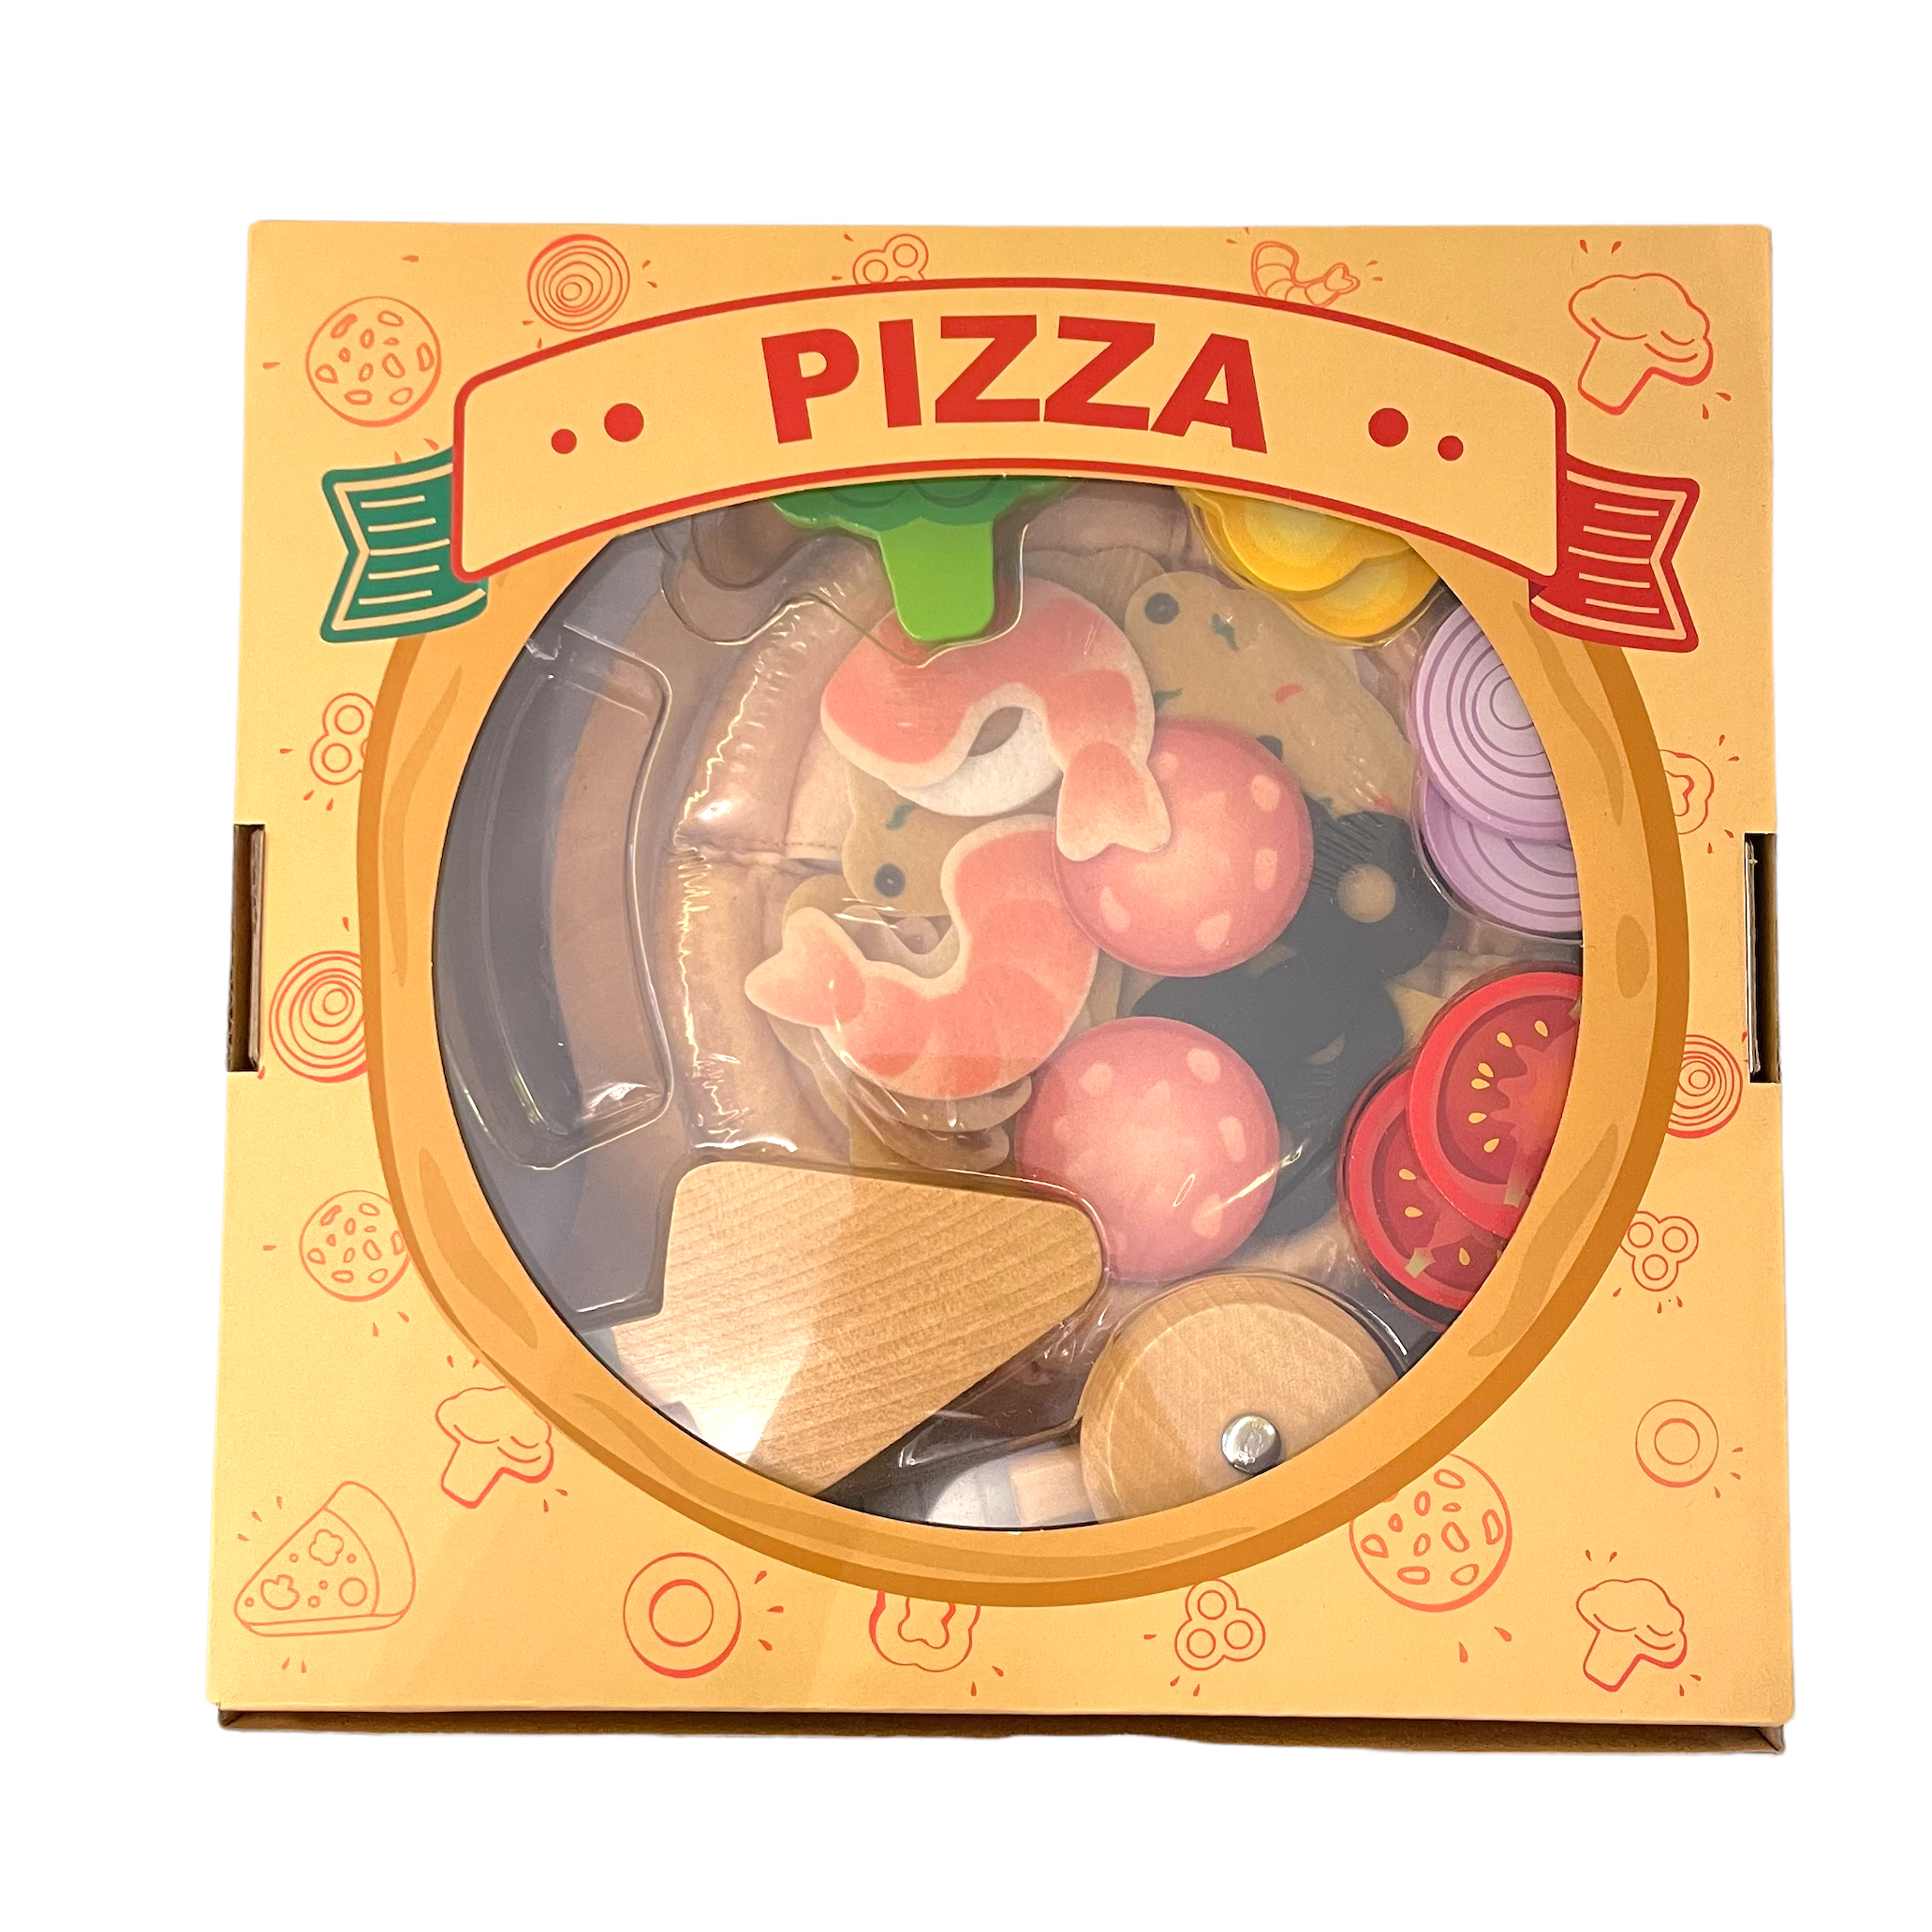 Hape Perfect Pizza Playset